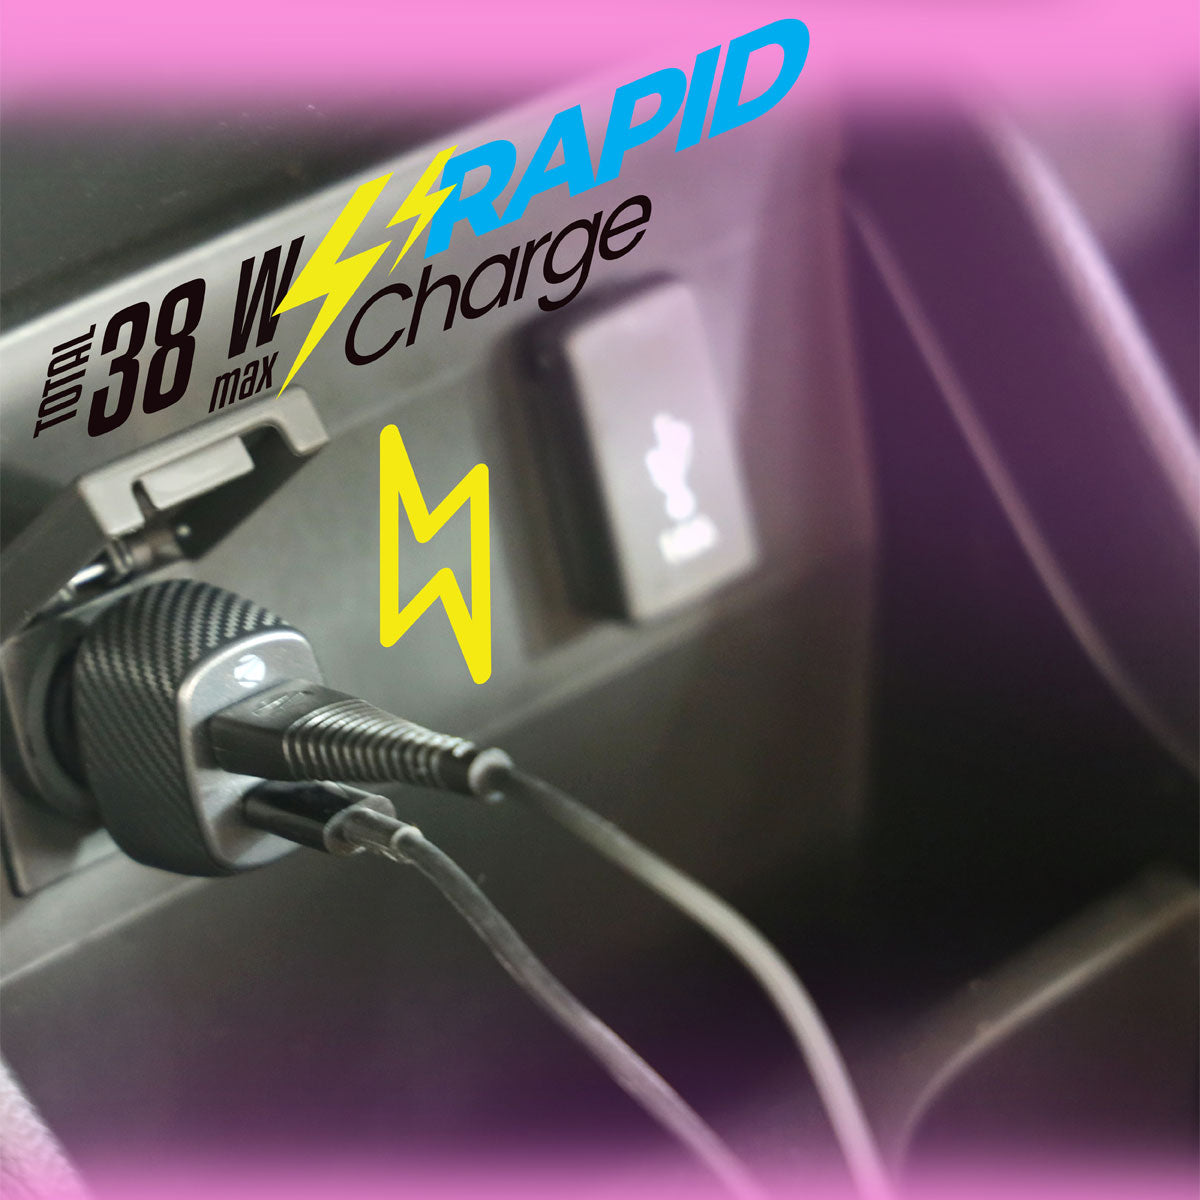 Zeb-CC38 - Car charger - Zebronics